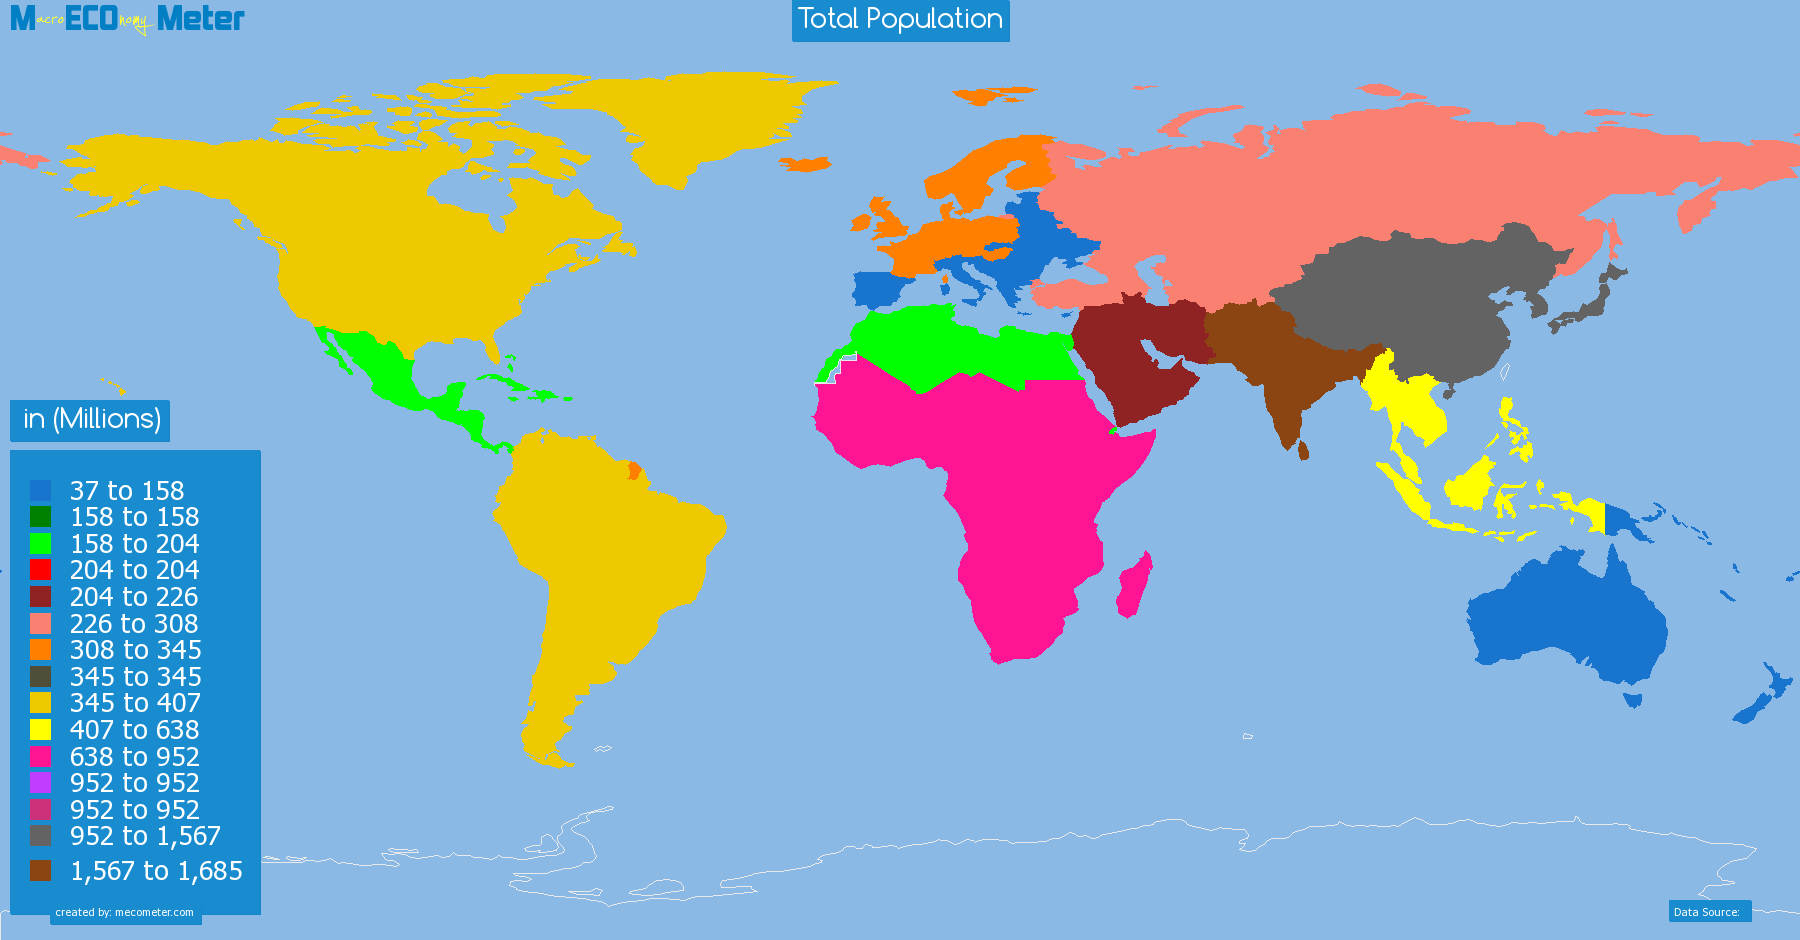 Total Population by region